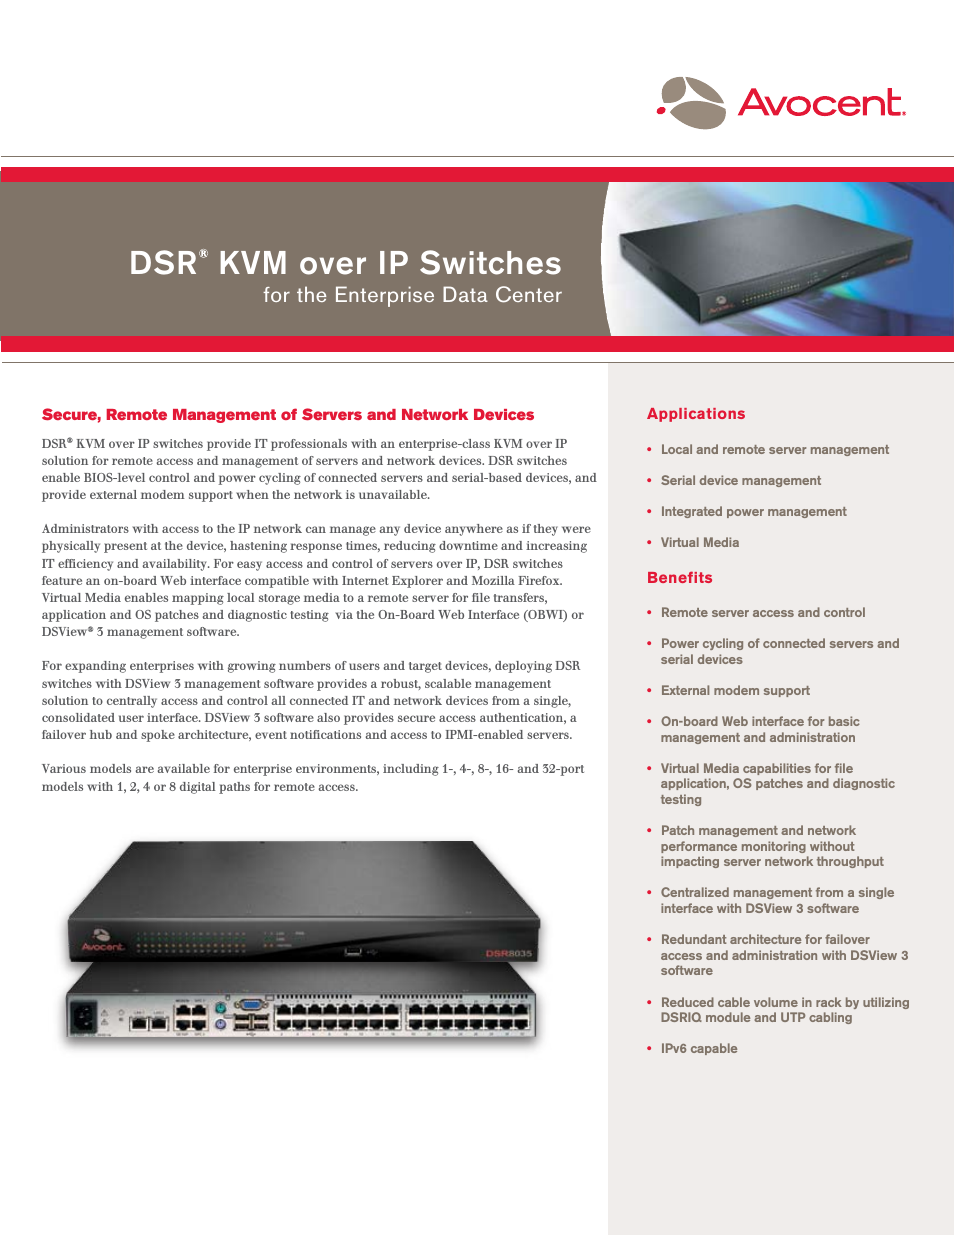 DSR KVM over IP Switch